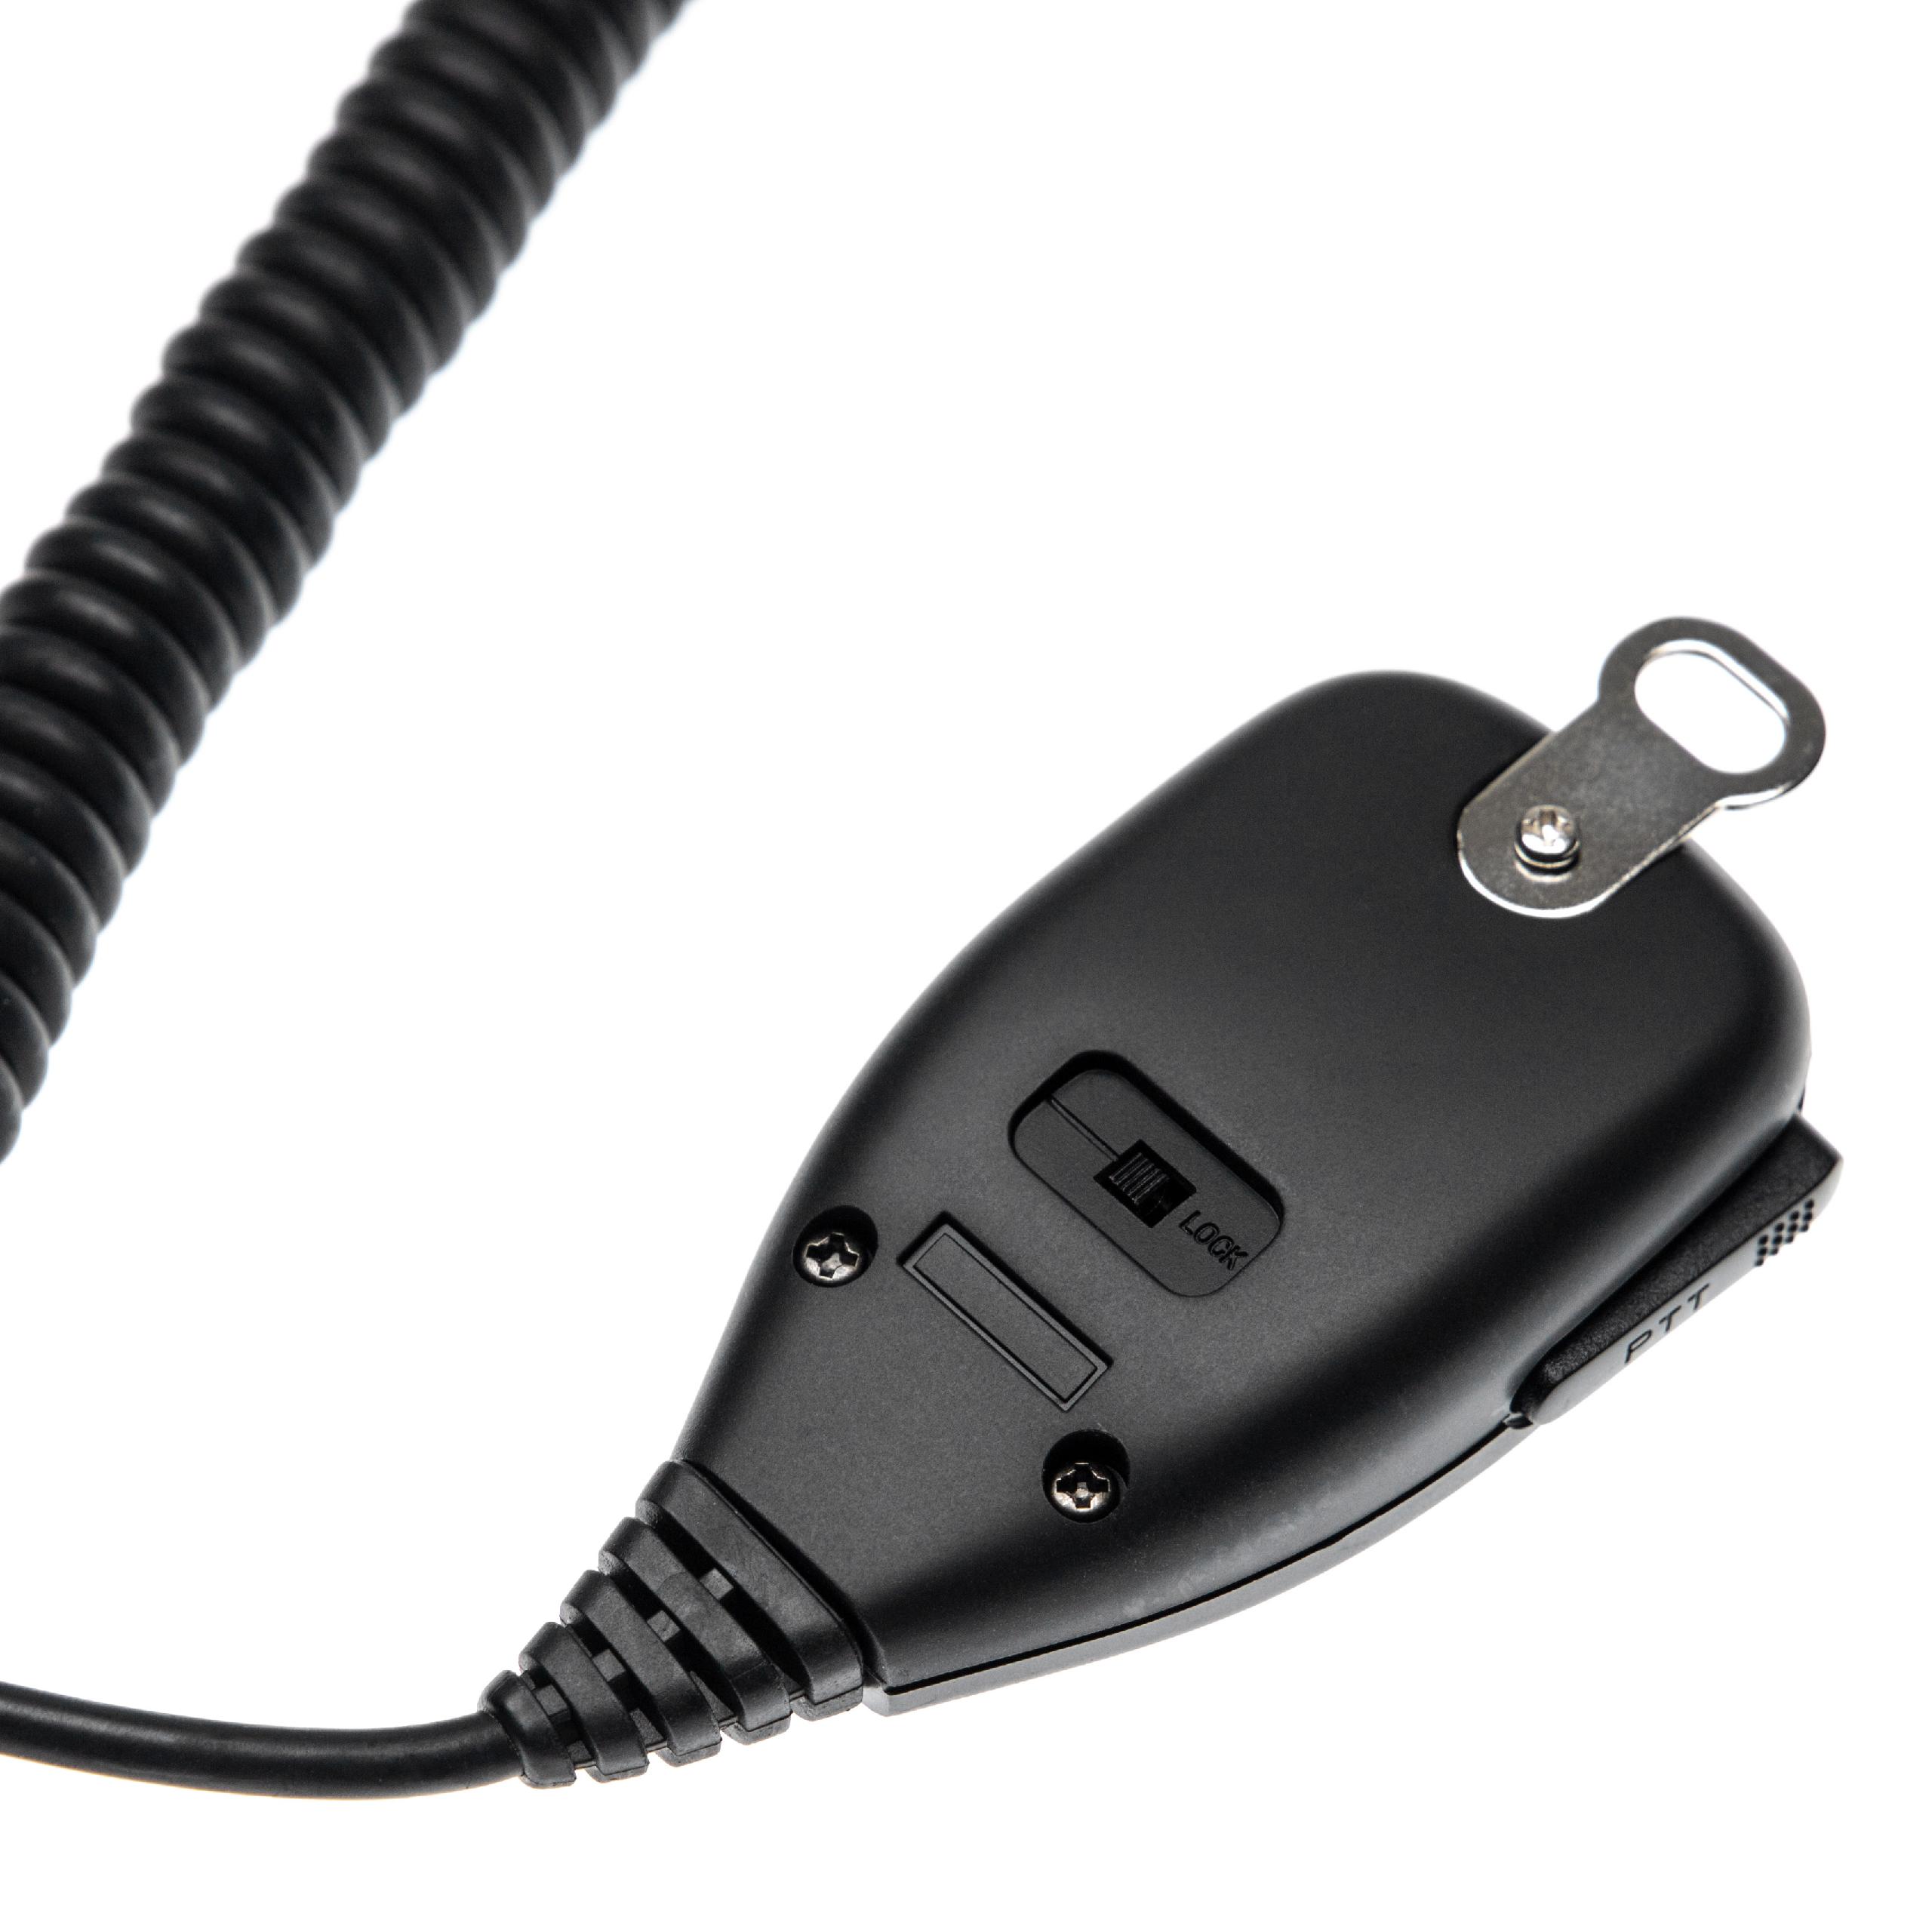 vhbw Lautsprecher-Mikrofon passend für Kenwood TK-7100 Funkgerät